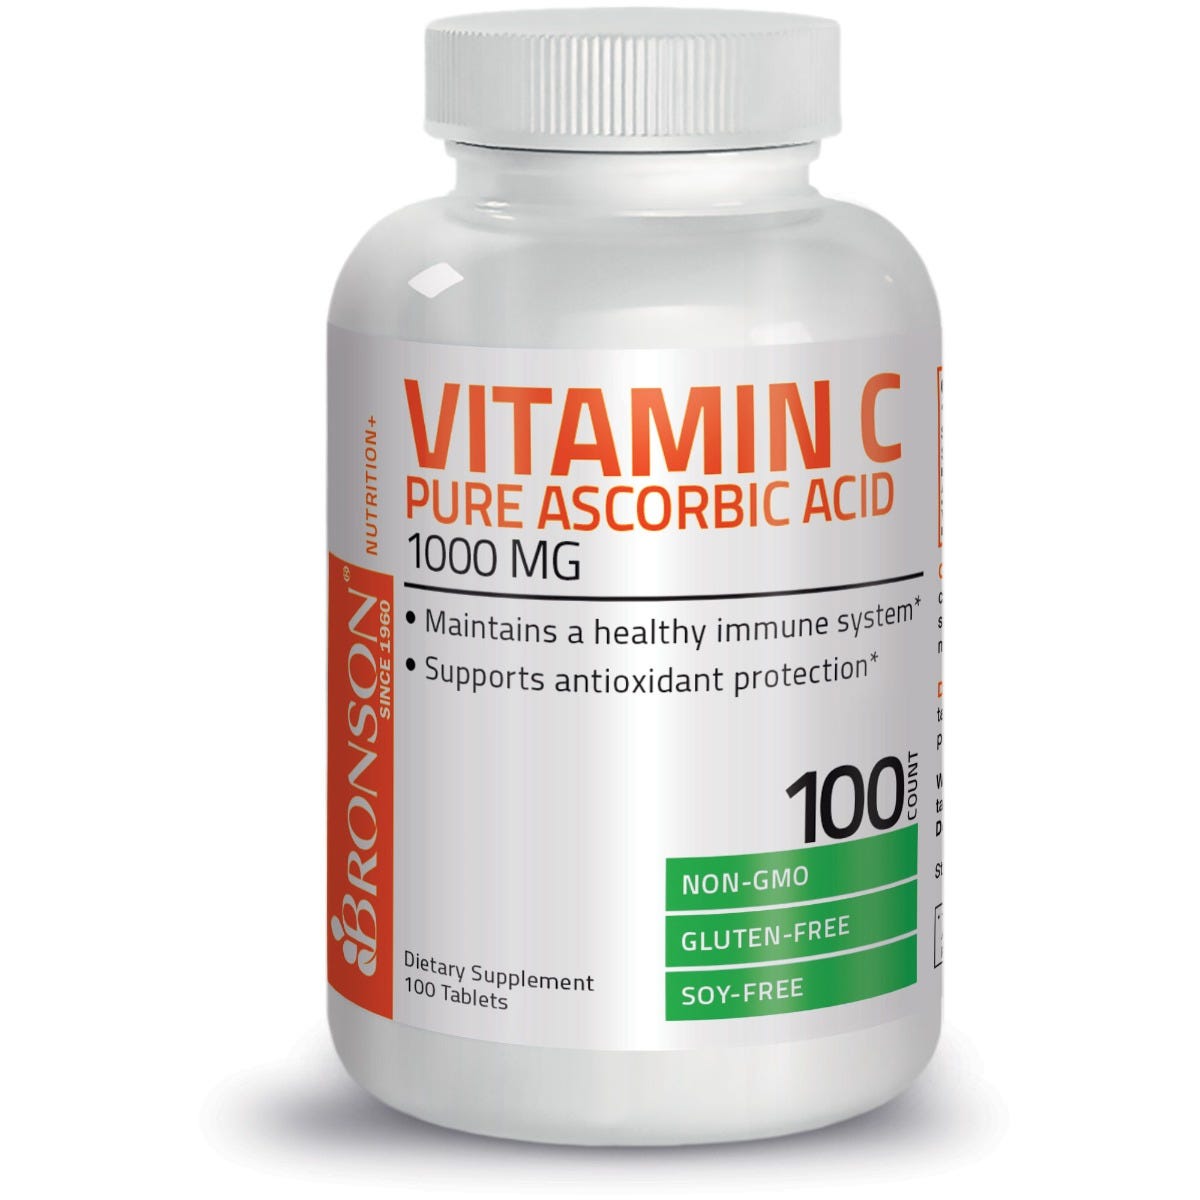 Vitamin C Pure Ascorbic Acid - 1,000 mg view 1 of 6